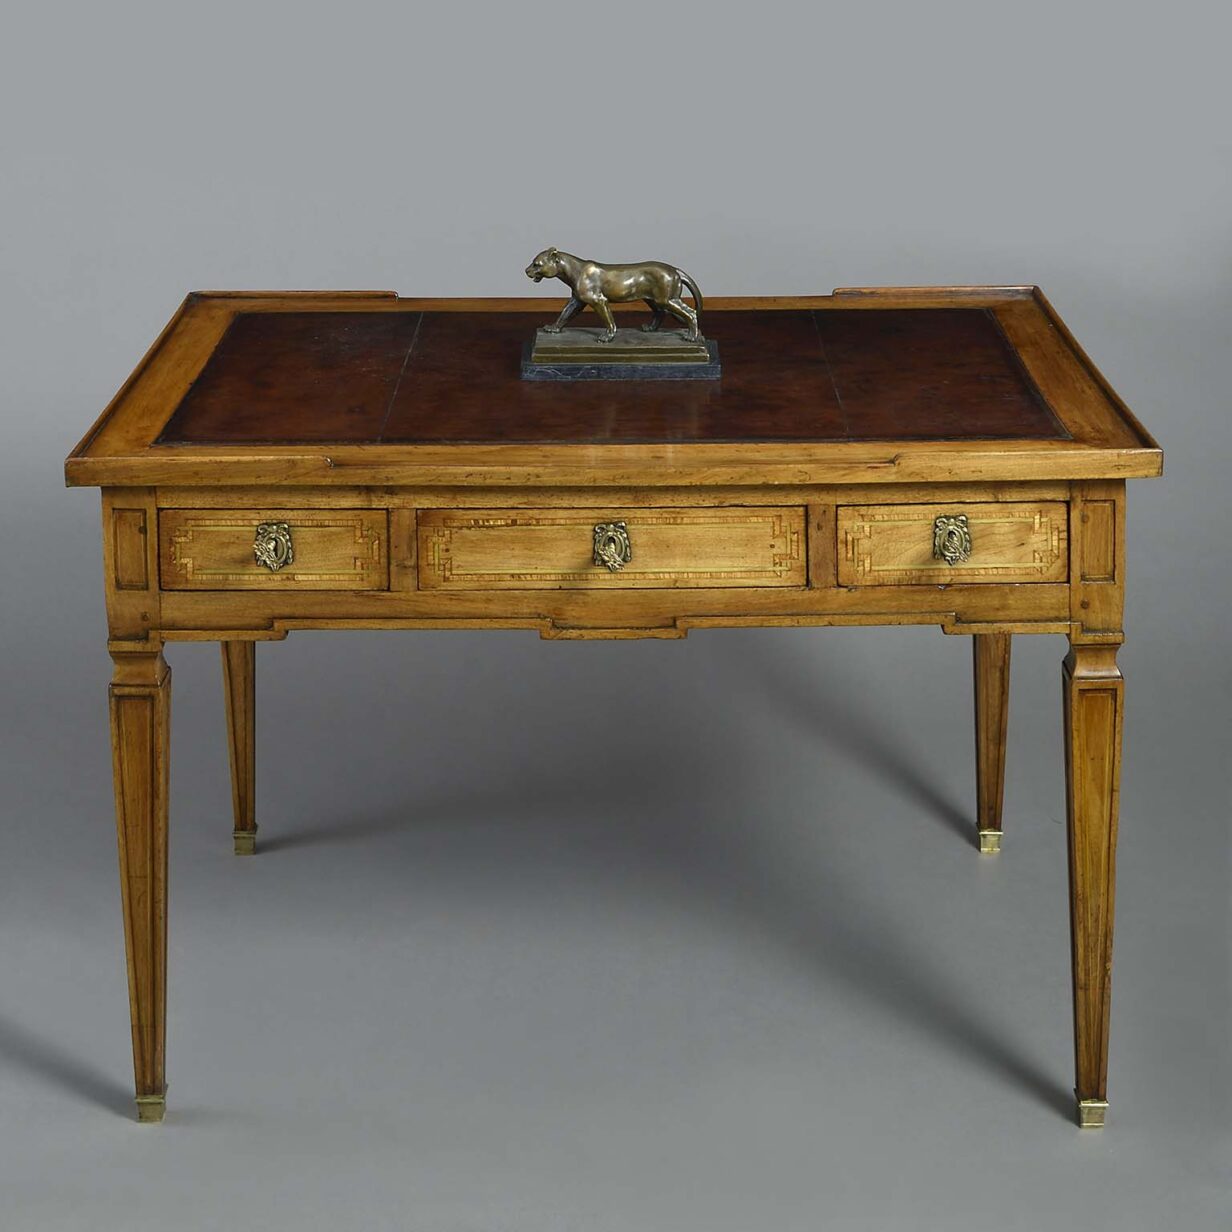 Late 18th century inlaid walnut writing desk